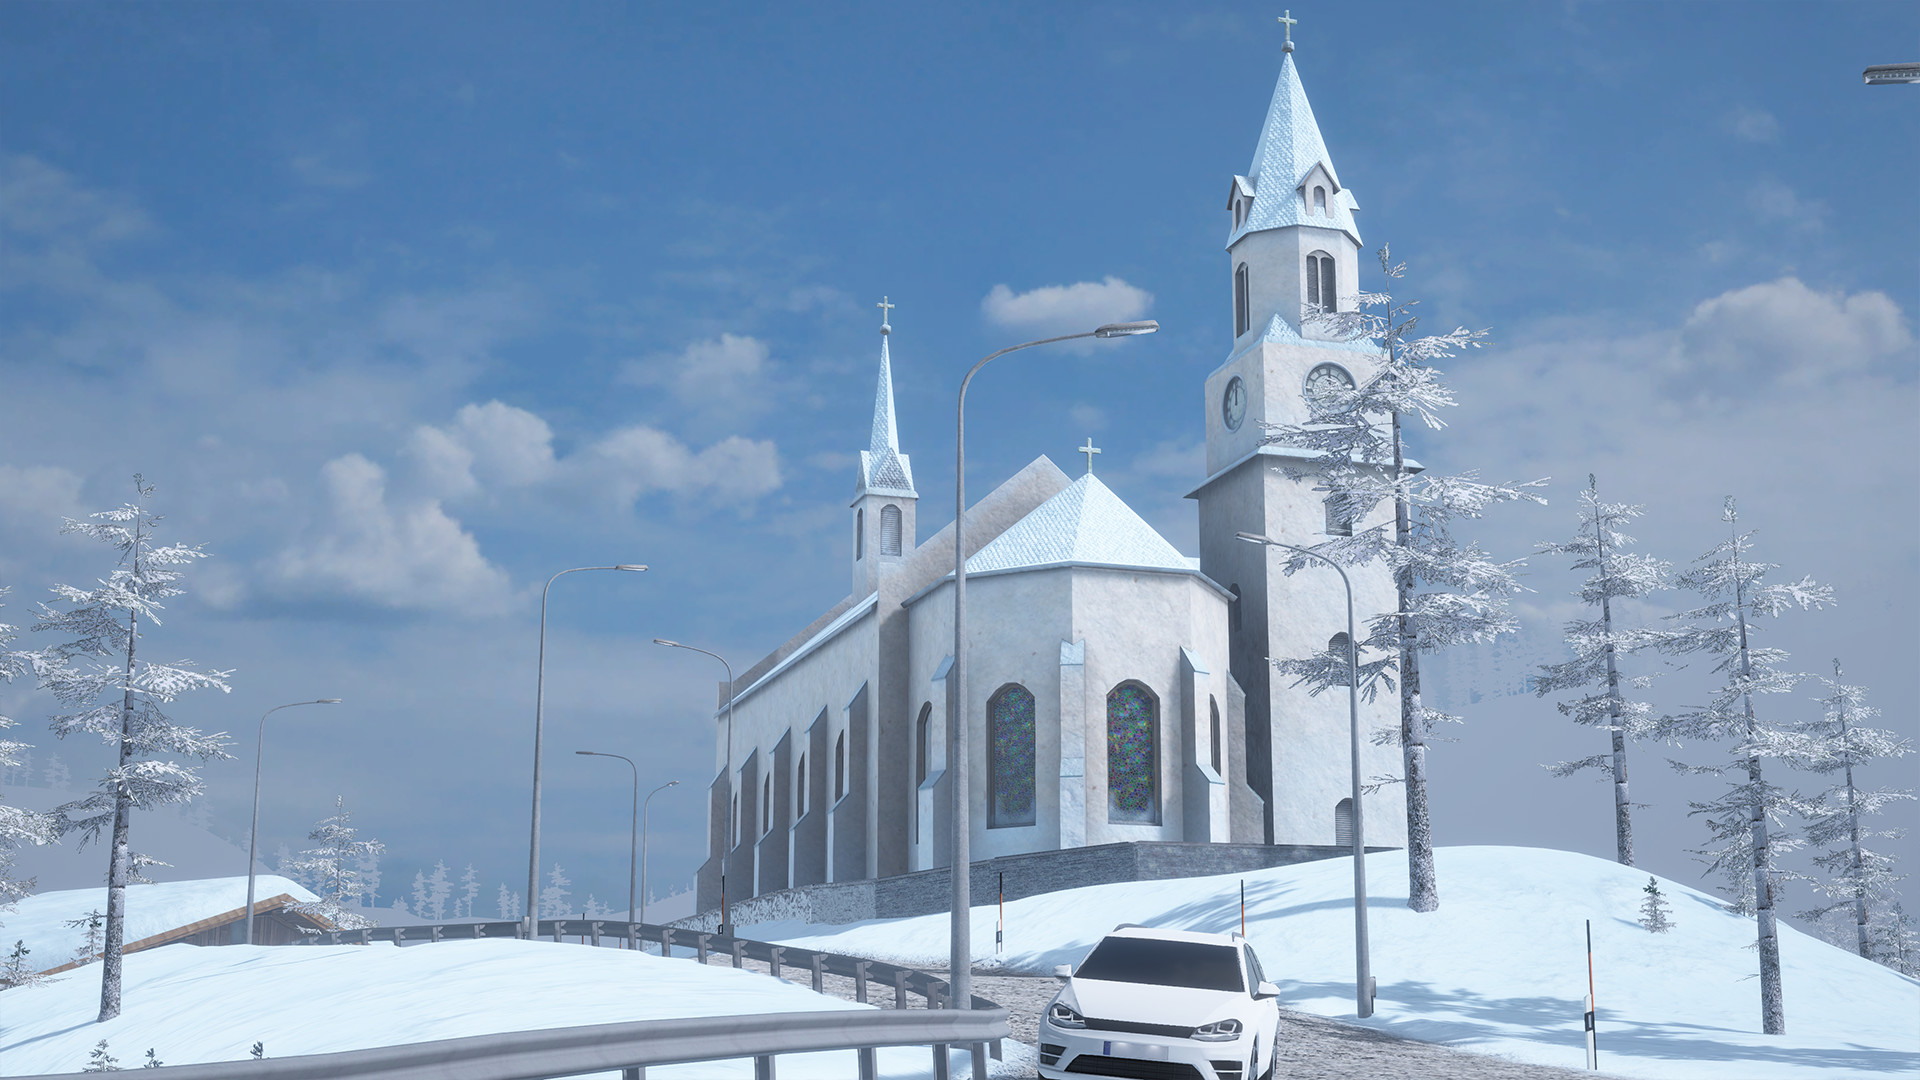 Alpine - The Simulation Game - screenshot 7